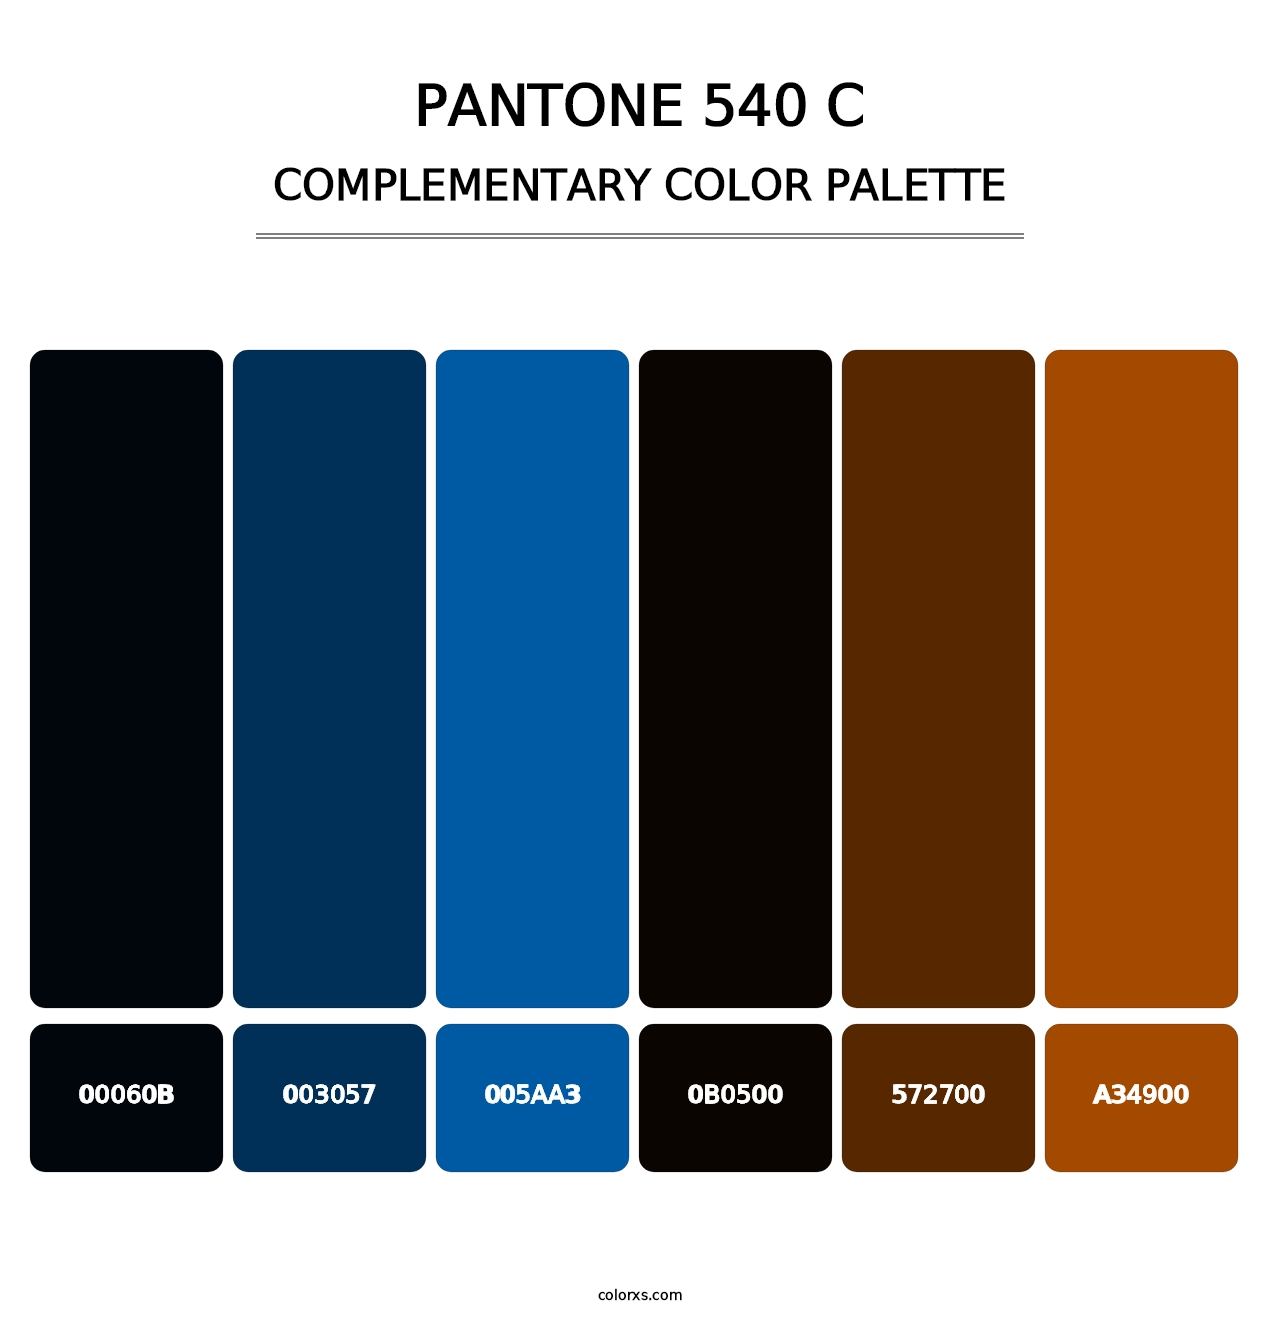 PANTONE 540 C - Complementary Color Palette